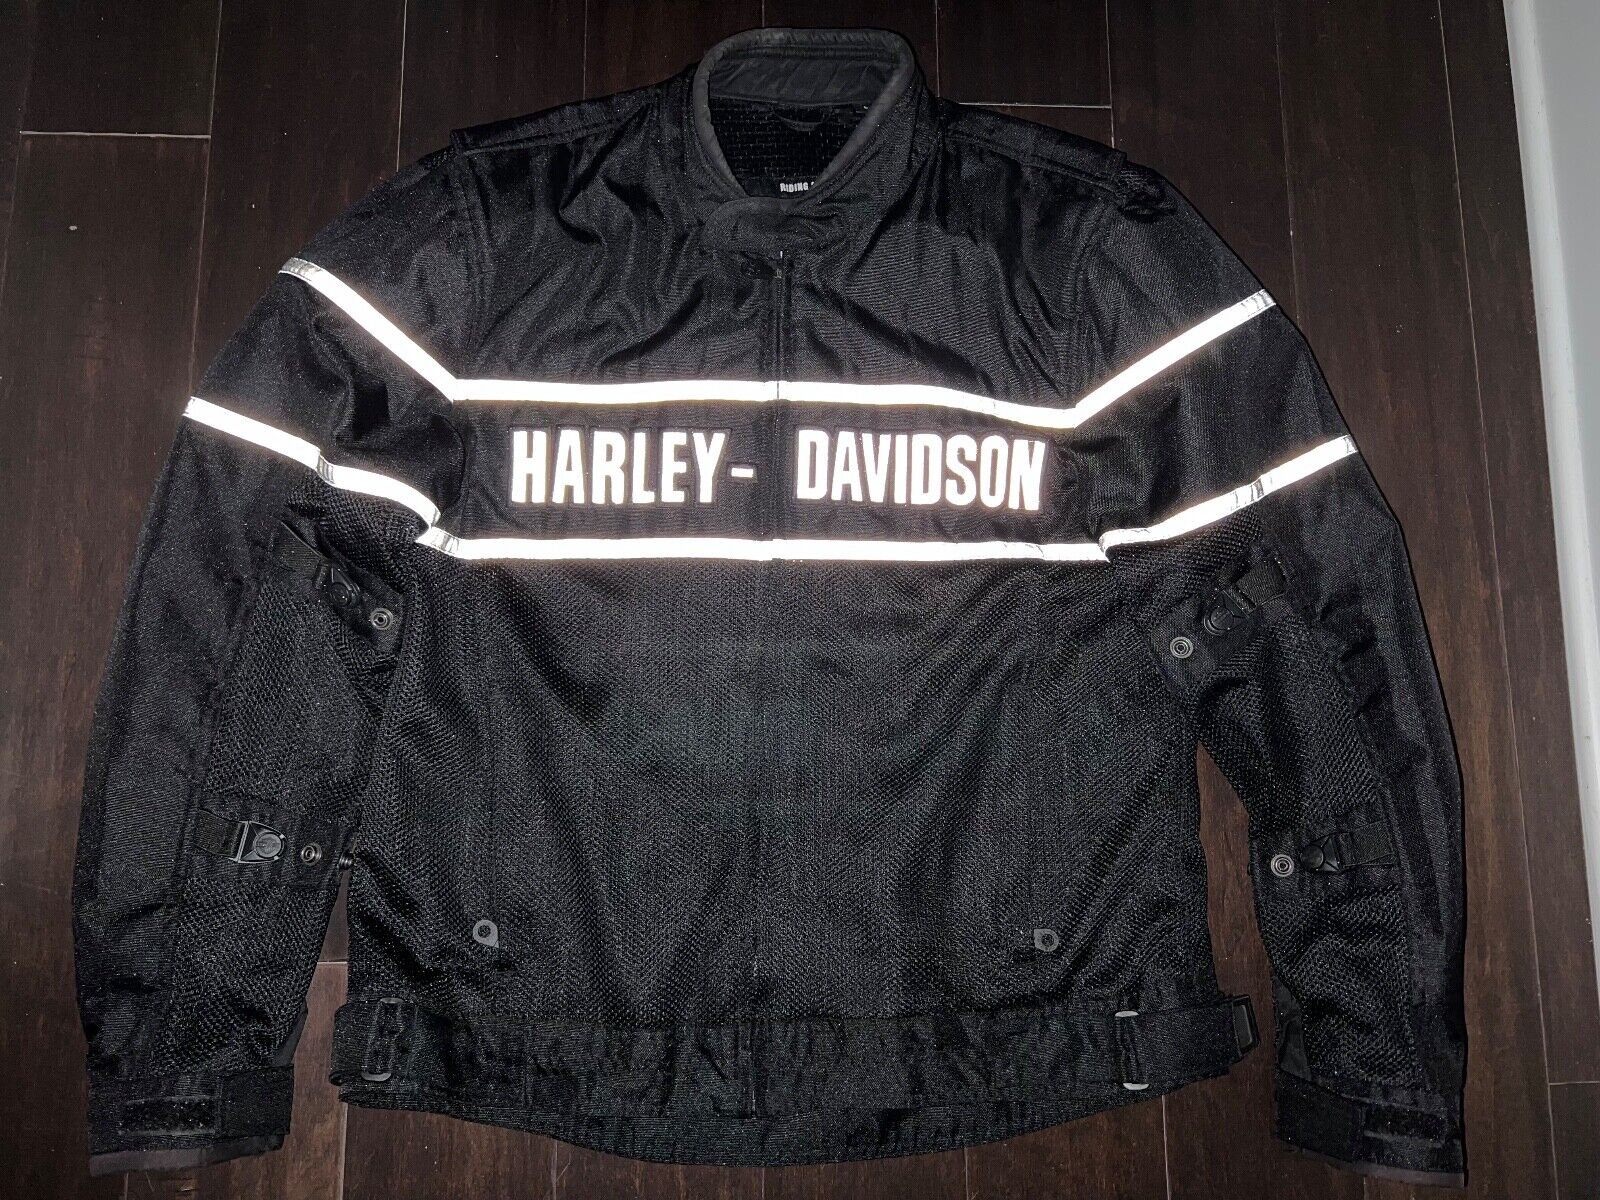 Harley Davidson Men's Classic Cruiser Mesh Riding Jacket Reflective Large